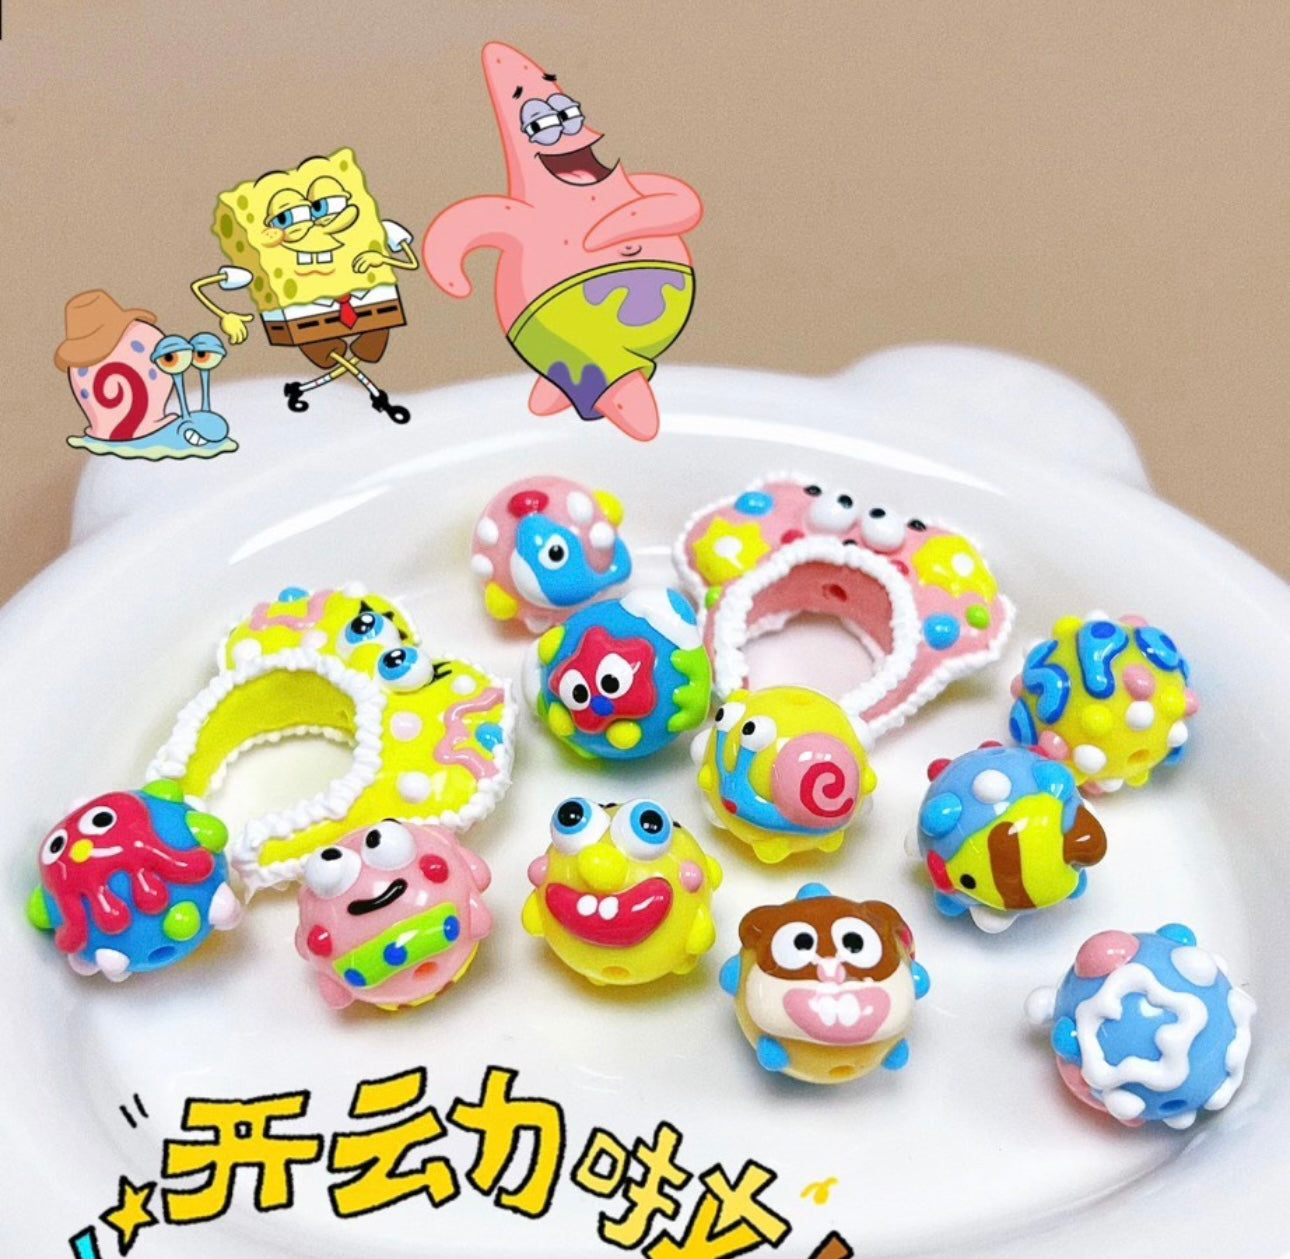 Customizable Spongebob Hand Painted Beads